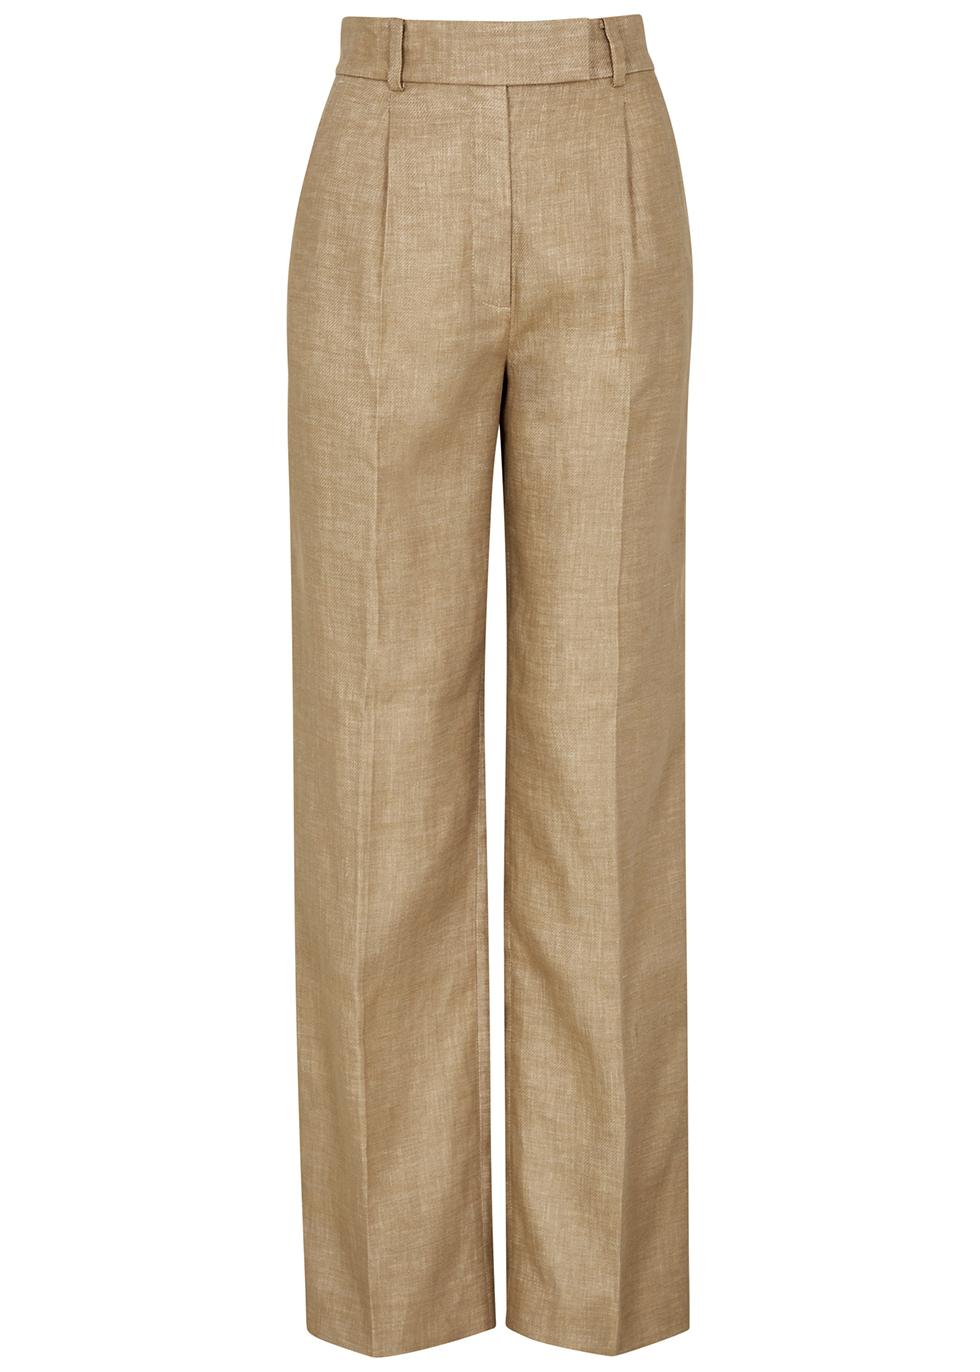 Charles brown linen-blend trousers by DAY BIRGER ET MIKKELSEN